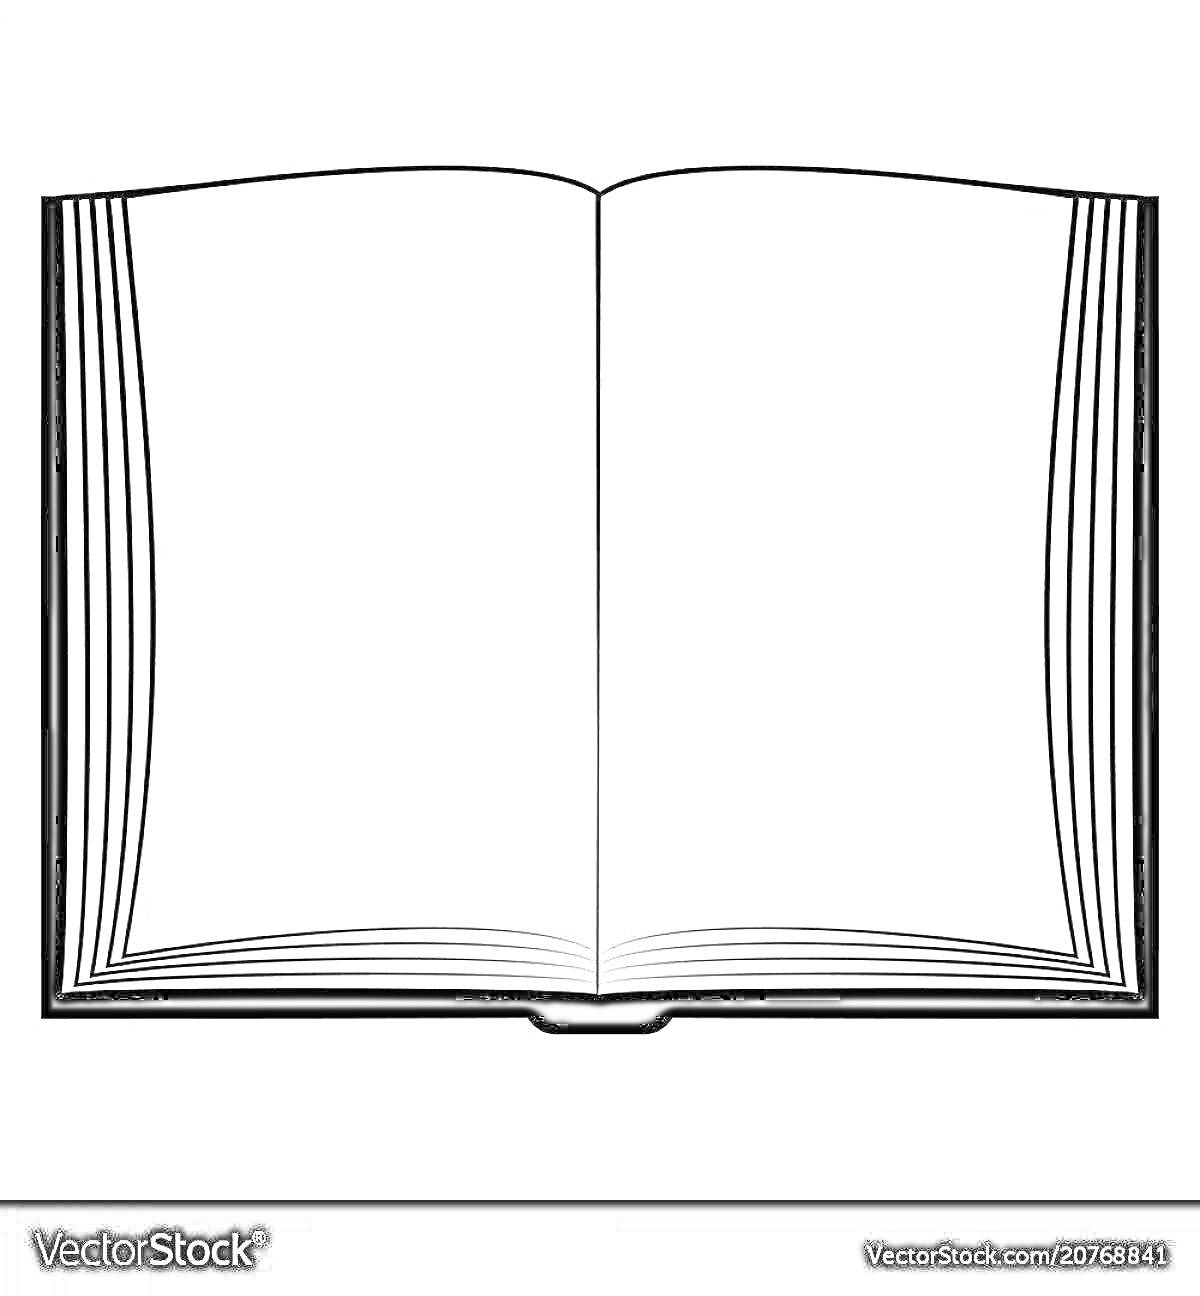 Раскраска: раскрытая книга на прозрачном фоне